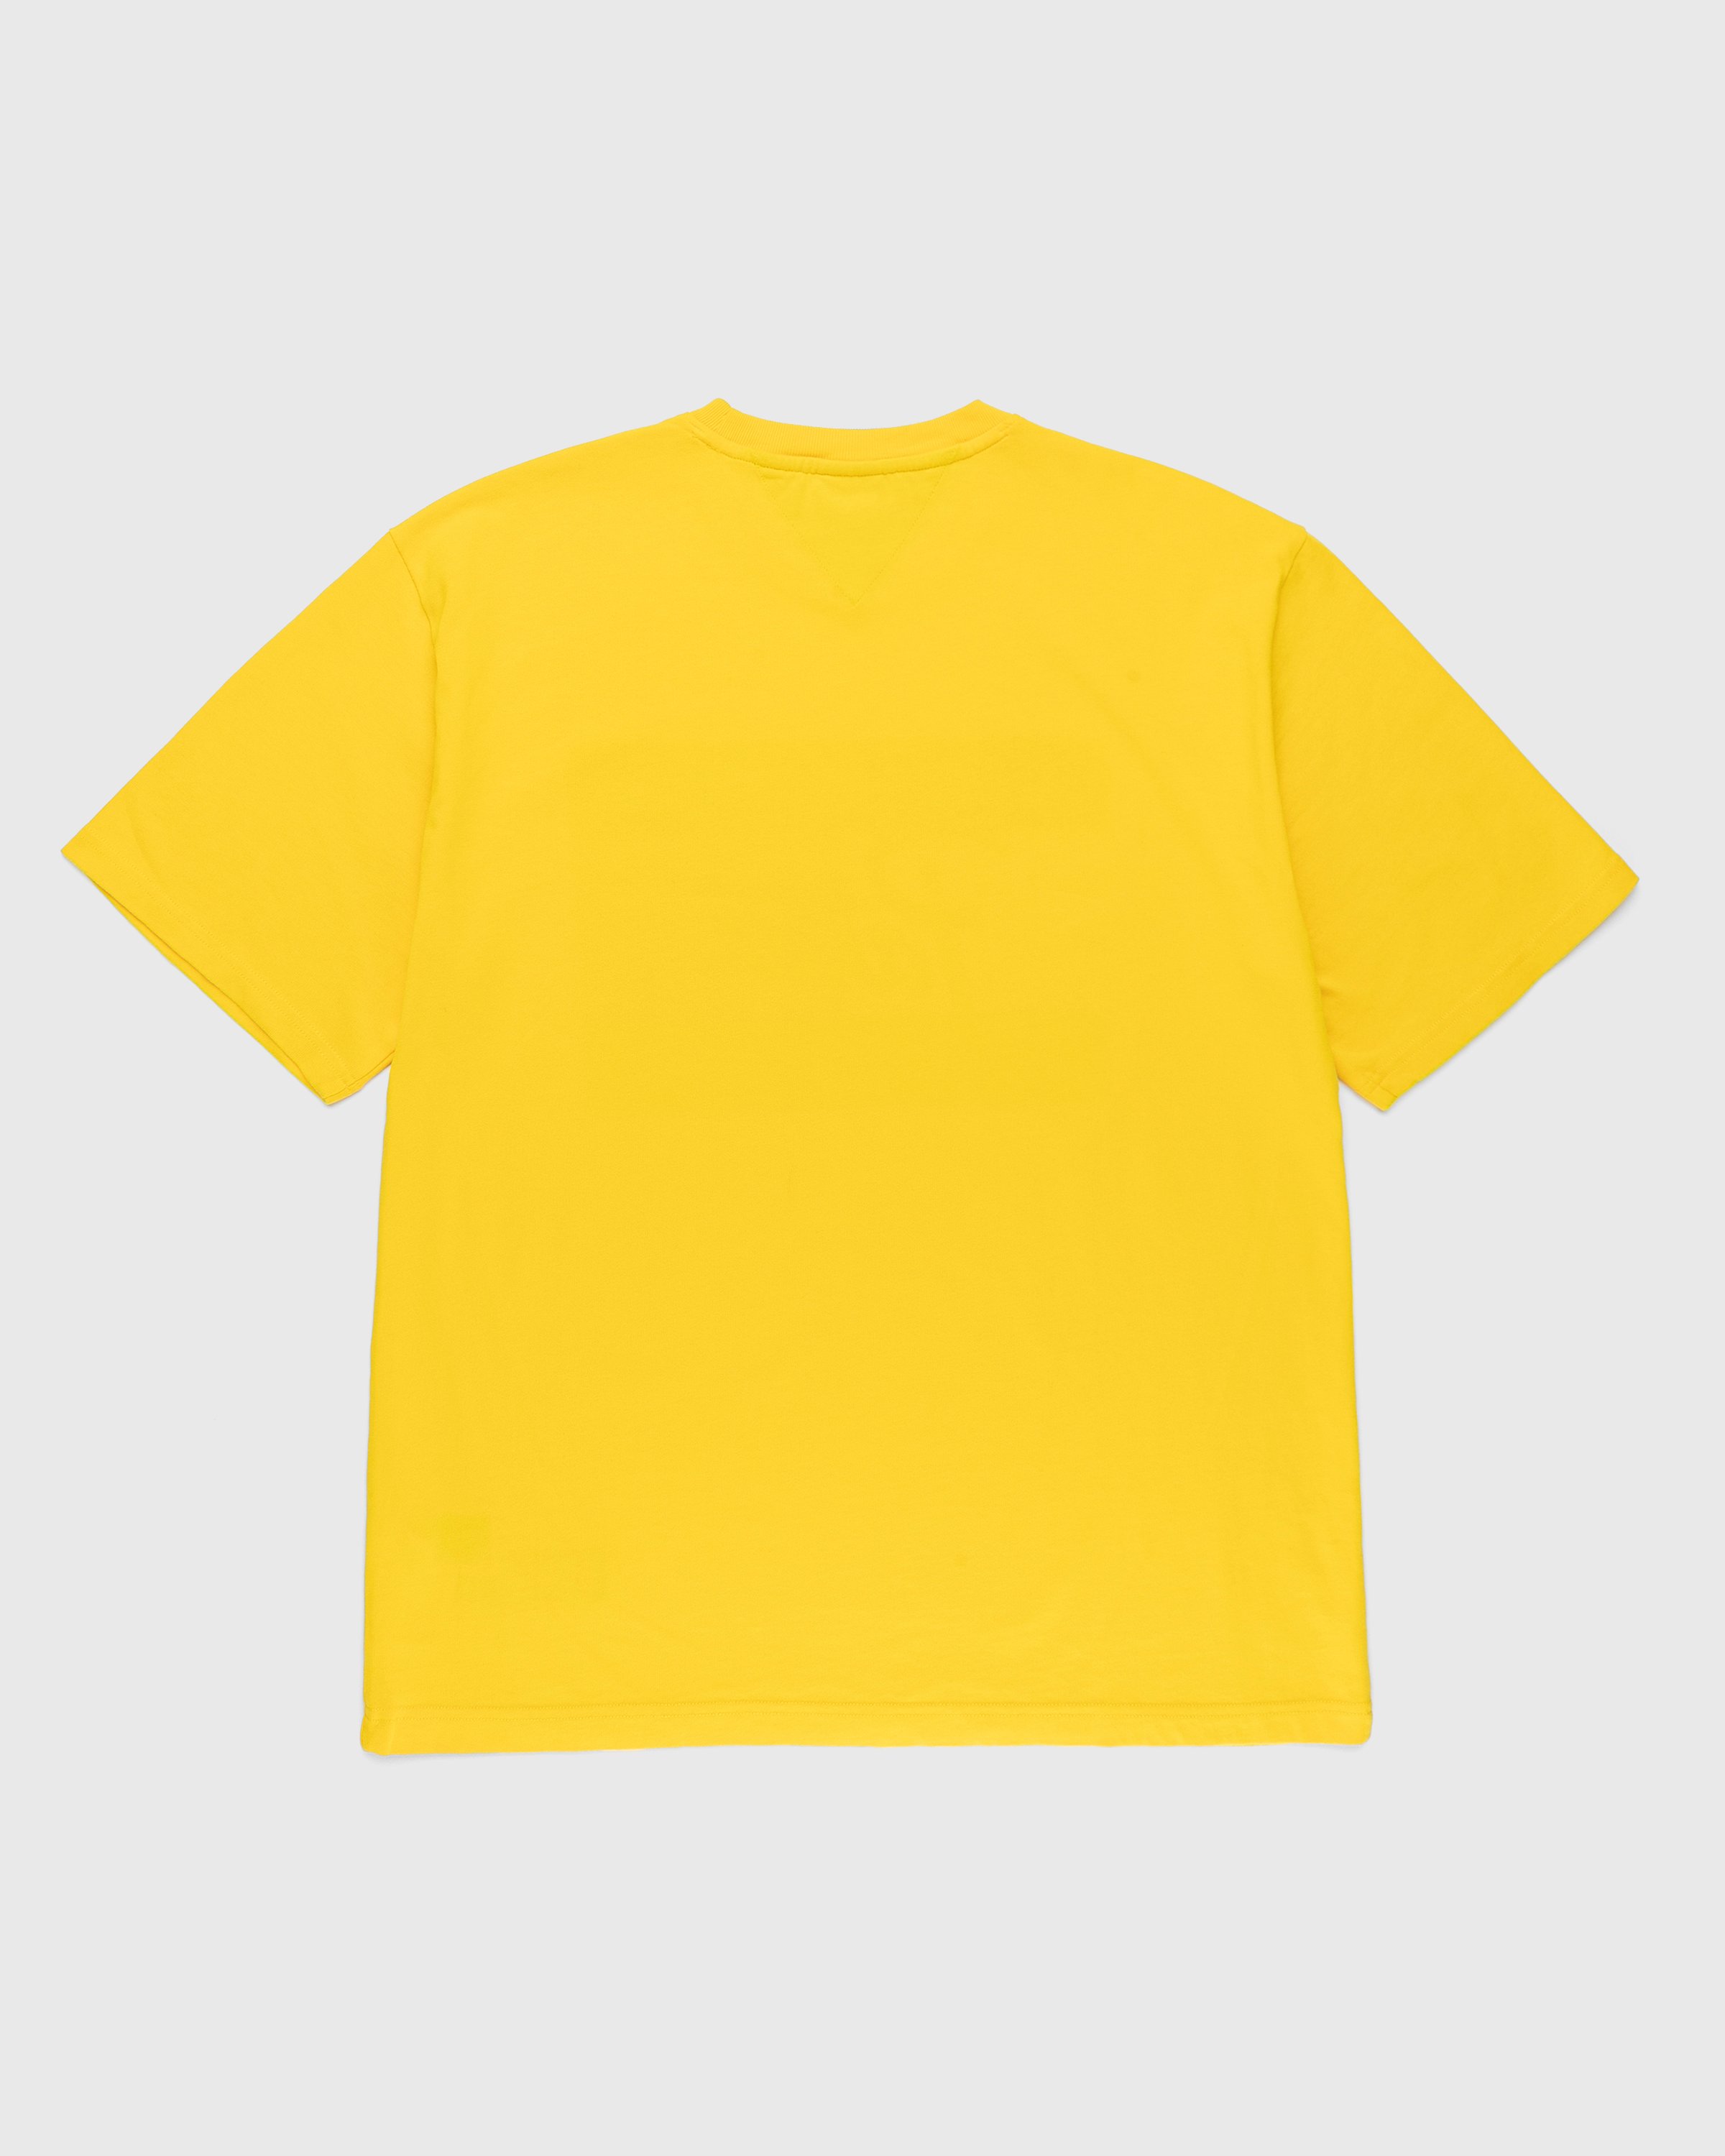 Patta x Tommy Hilfiger - T-Shirt Pollen - Clothing - Yellow - Image 2